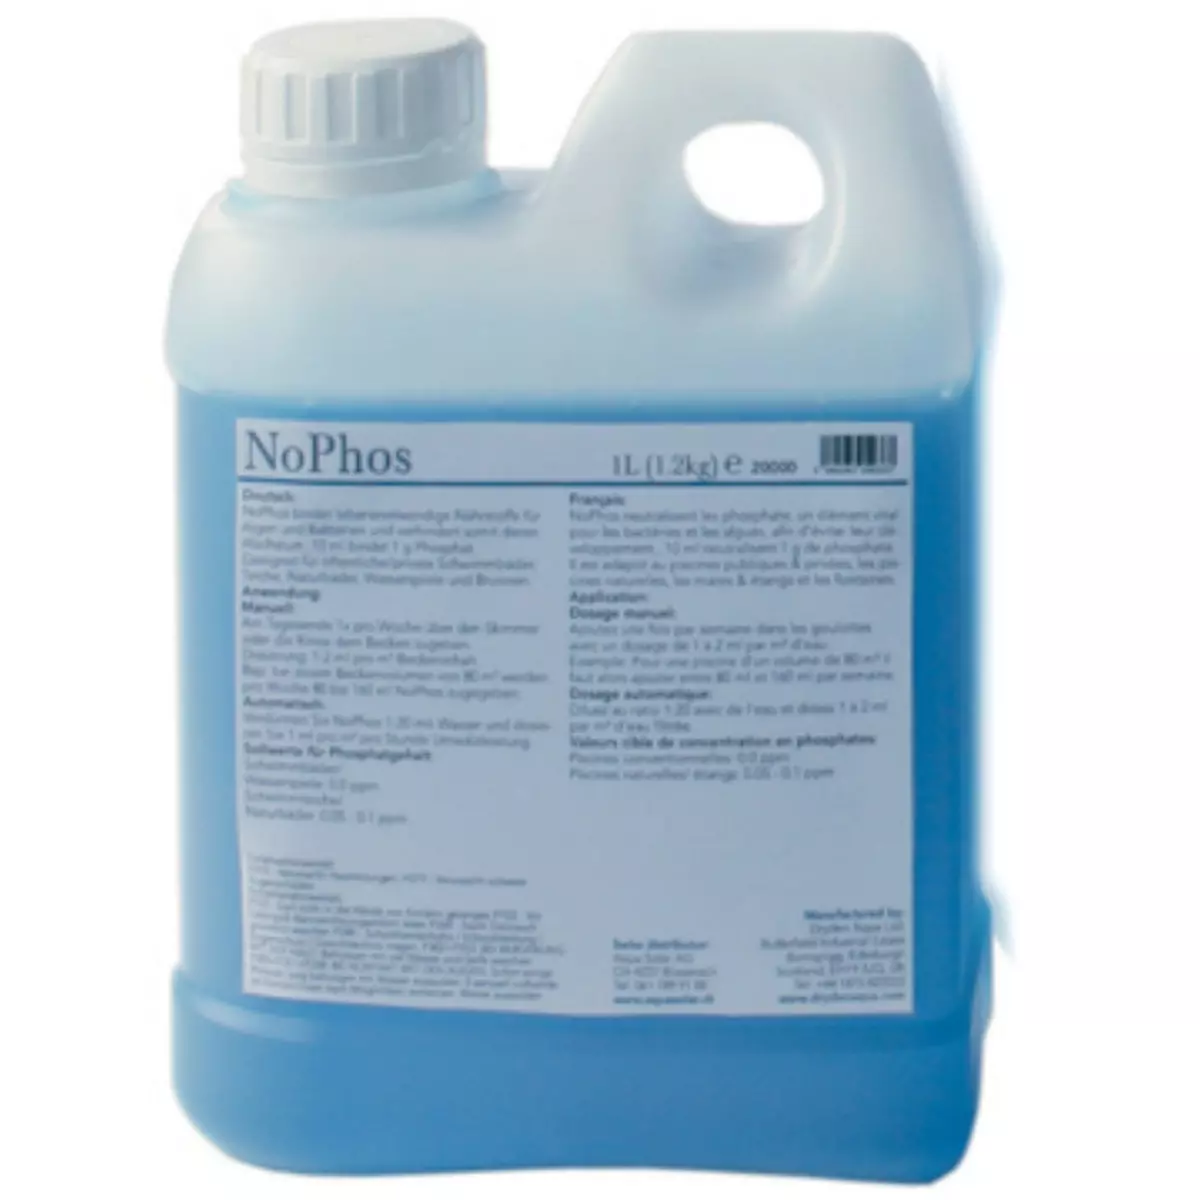 DRYDEN AQUA Liquide anti-phosphate 1l - no phos